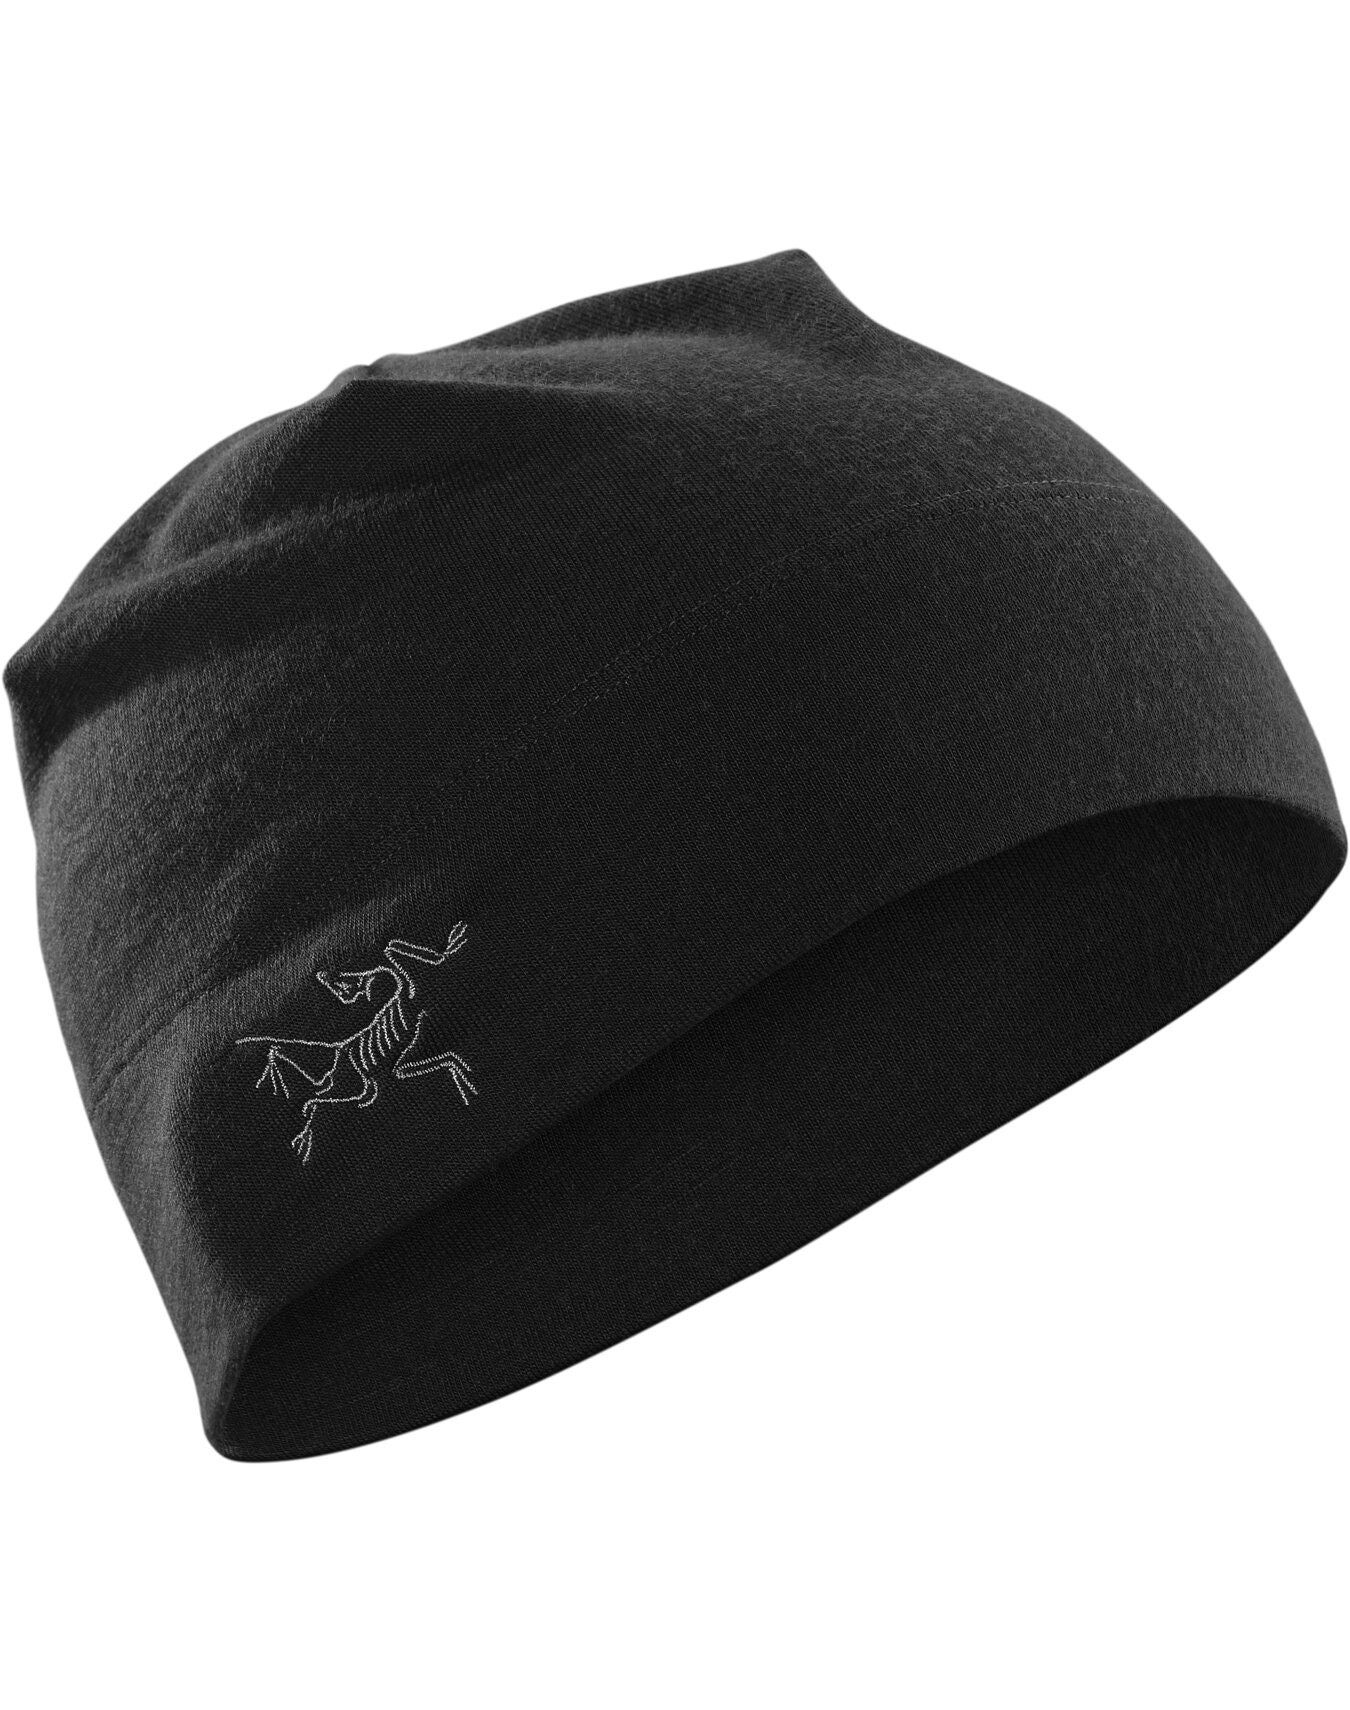 Rho LTW Merino Wool Beanie Thin Hat Winter Black Travel Outdoor Cap - 1